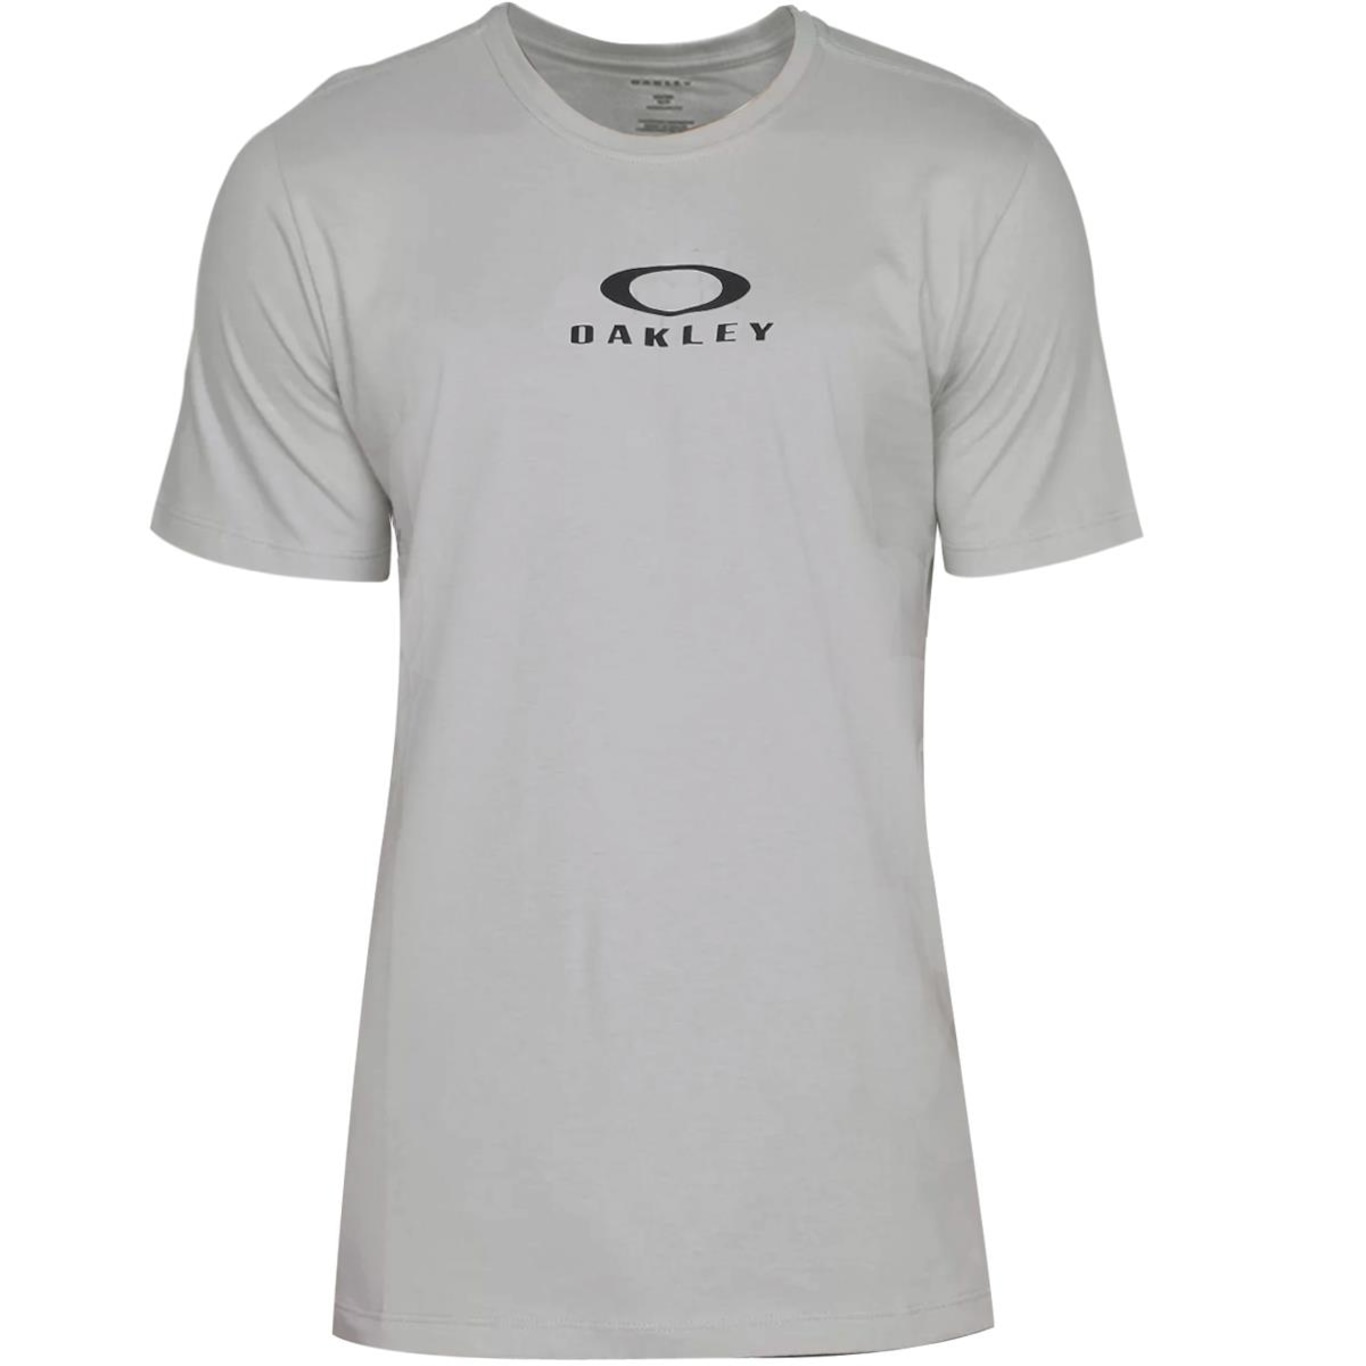 Camiseta Oakley Bark New White - Masculina